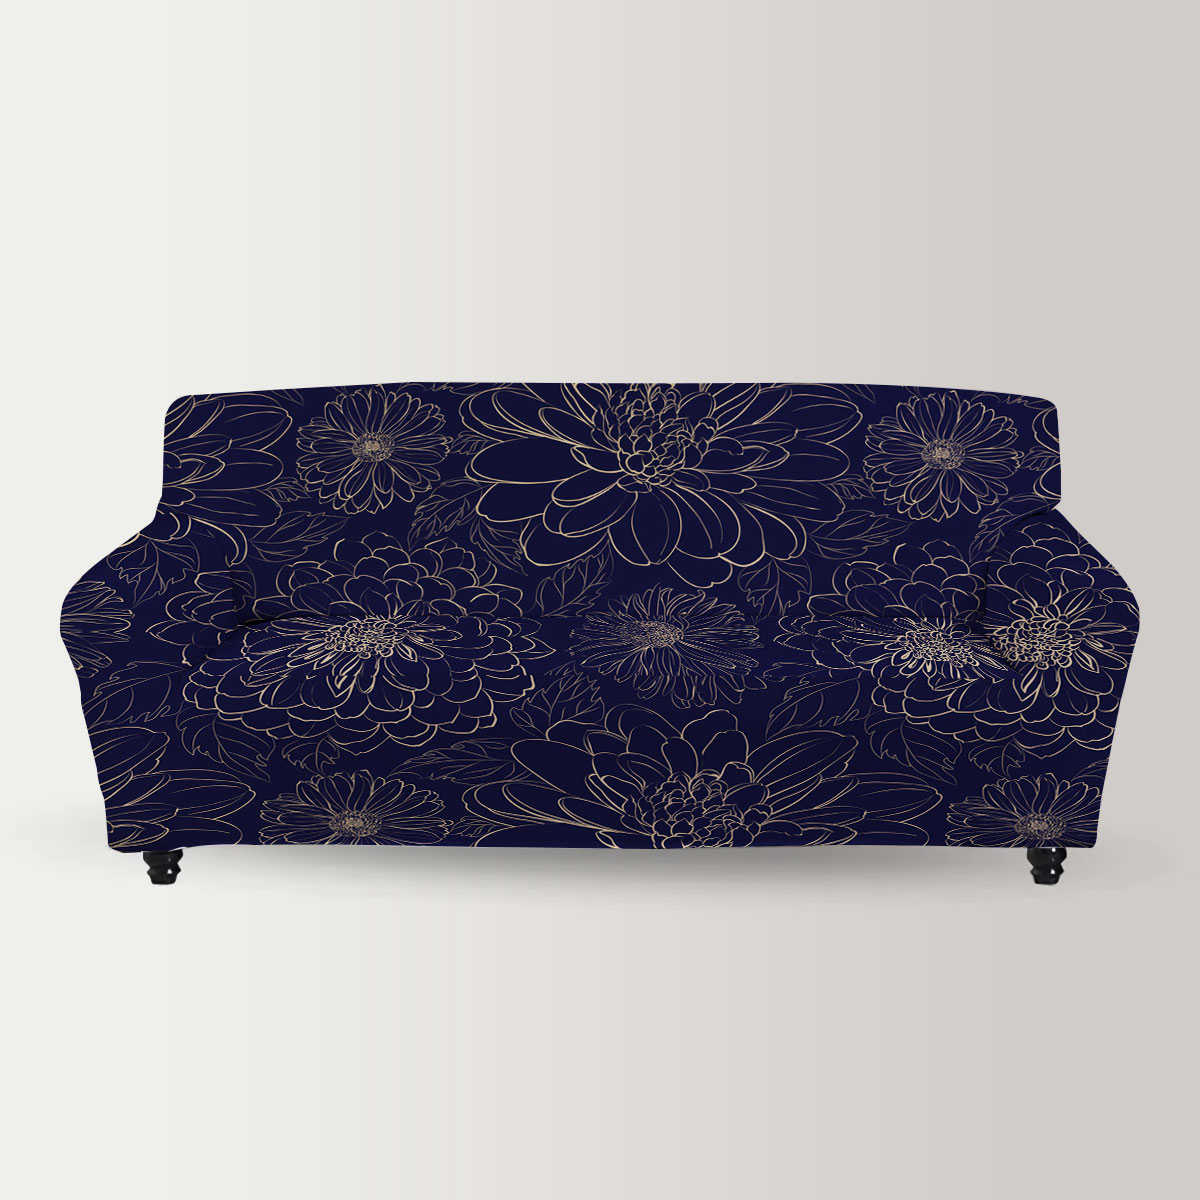 Retro Chrysanthemum Sofa Cover